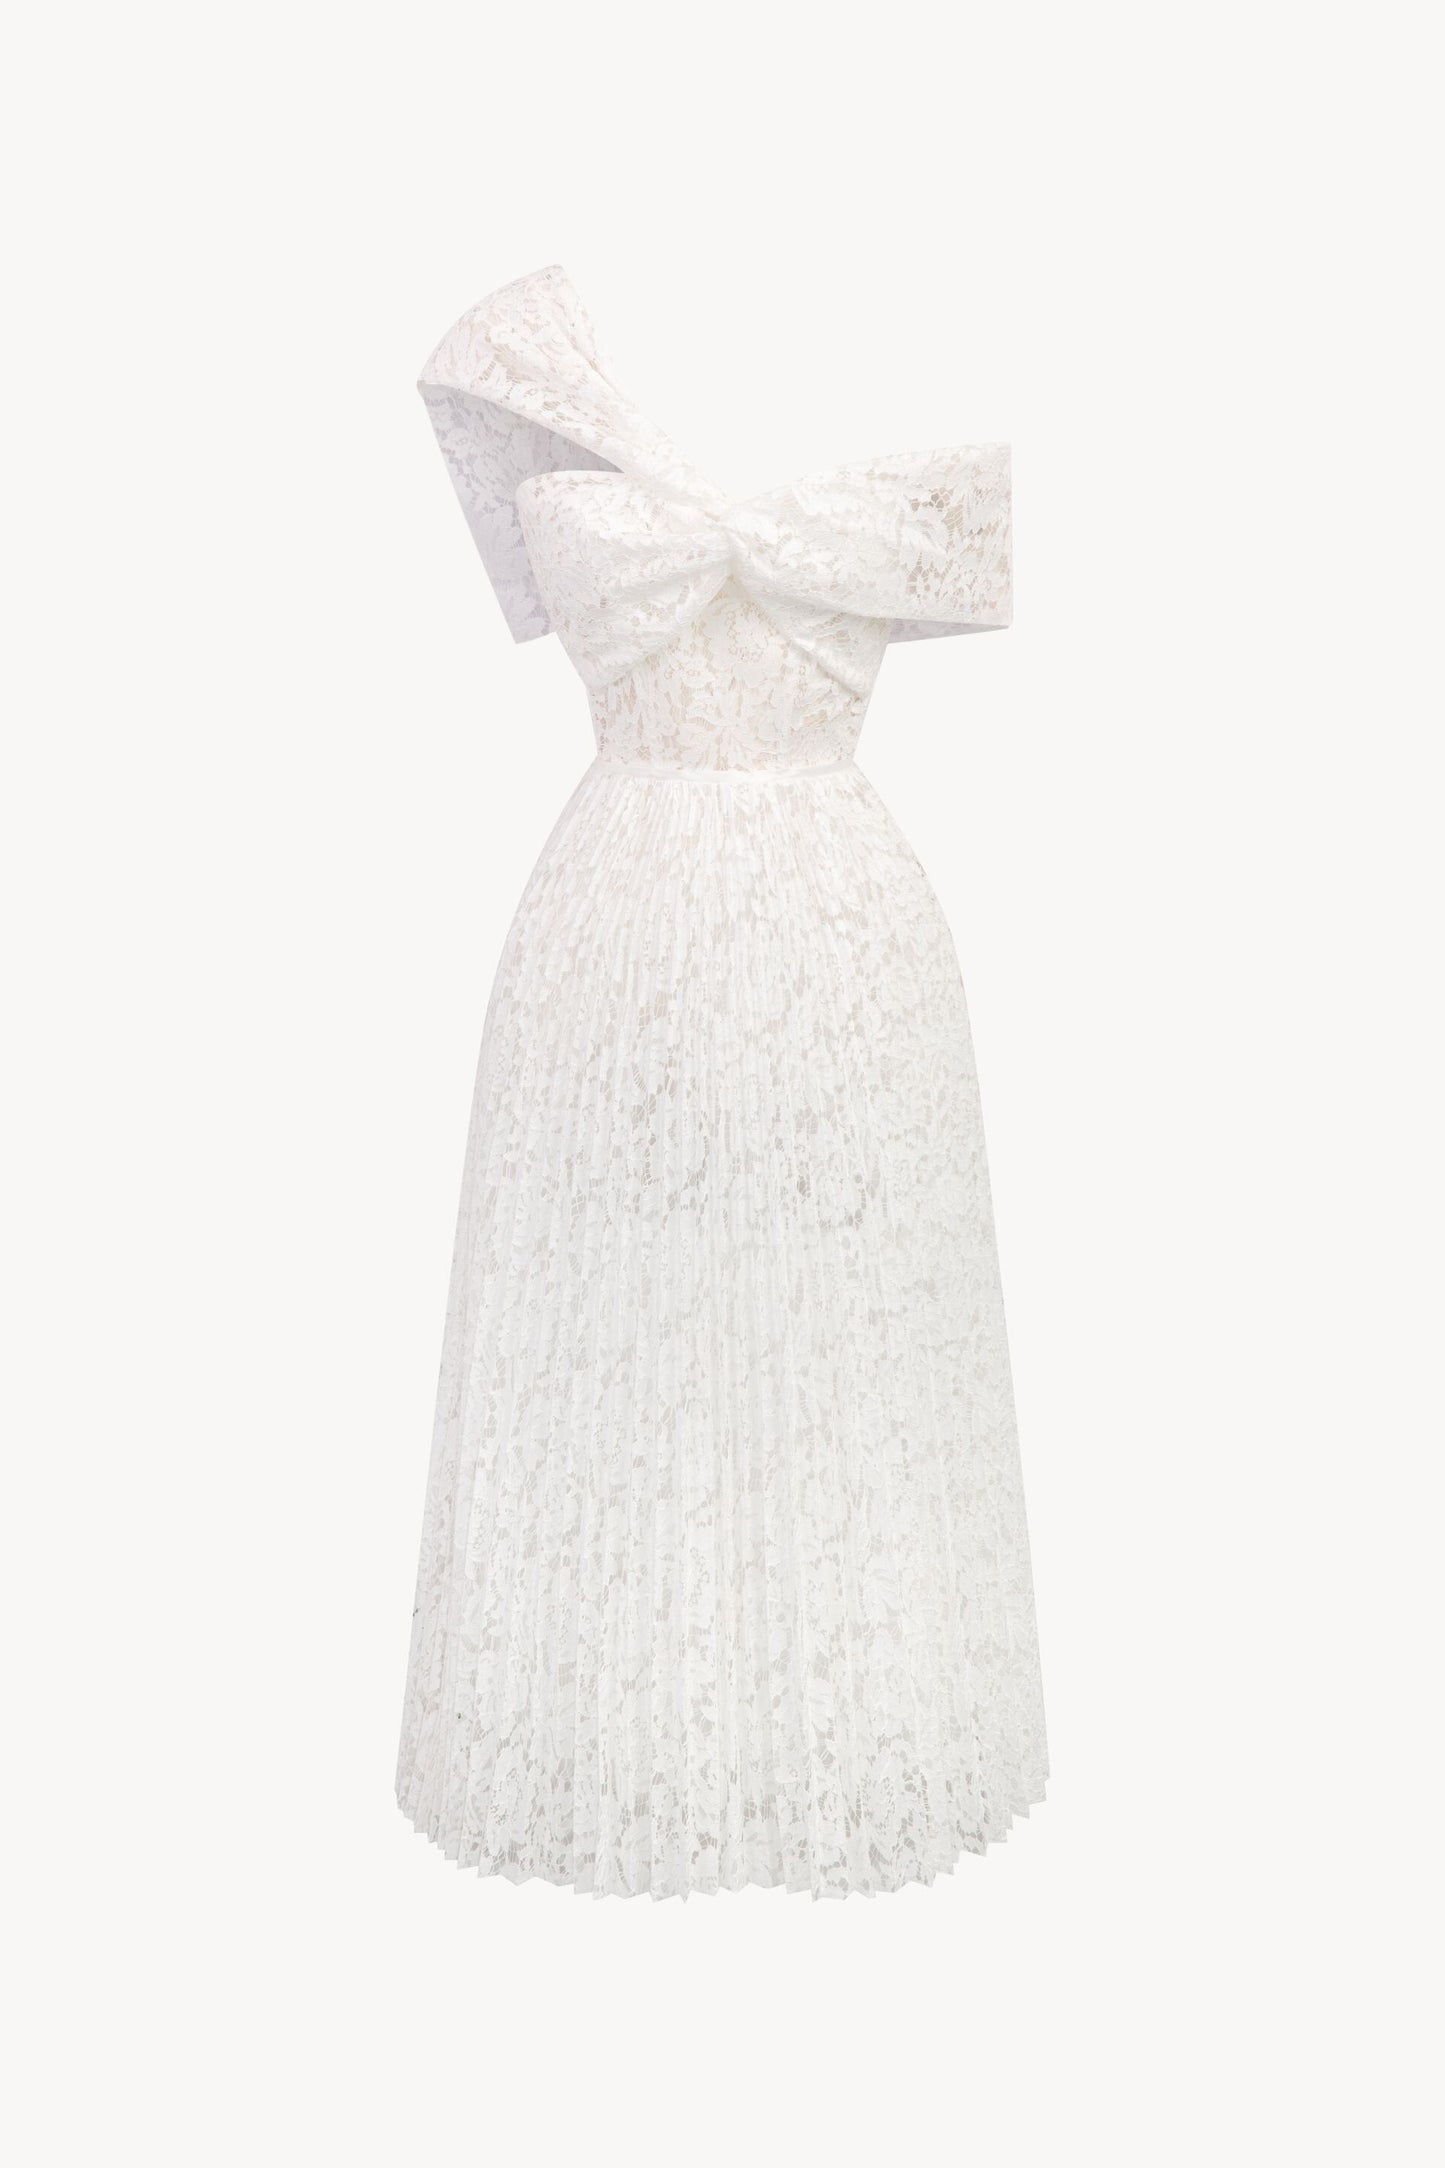 Elegant off shoulder pleated white lace wedding style bridal dress - Karias